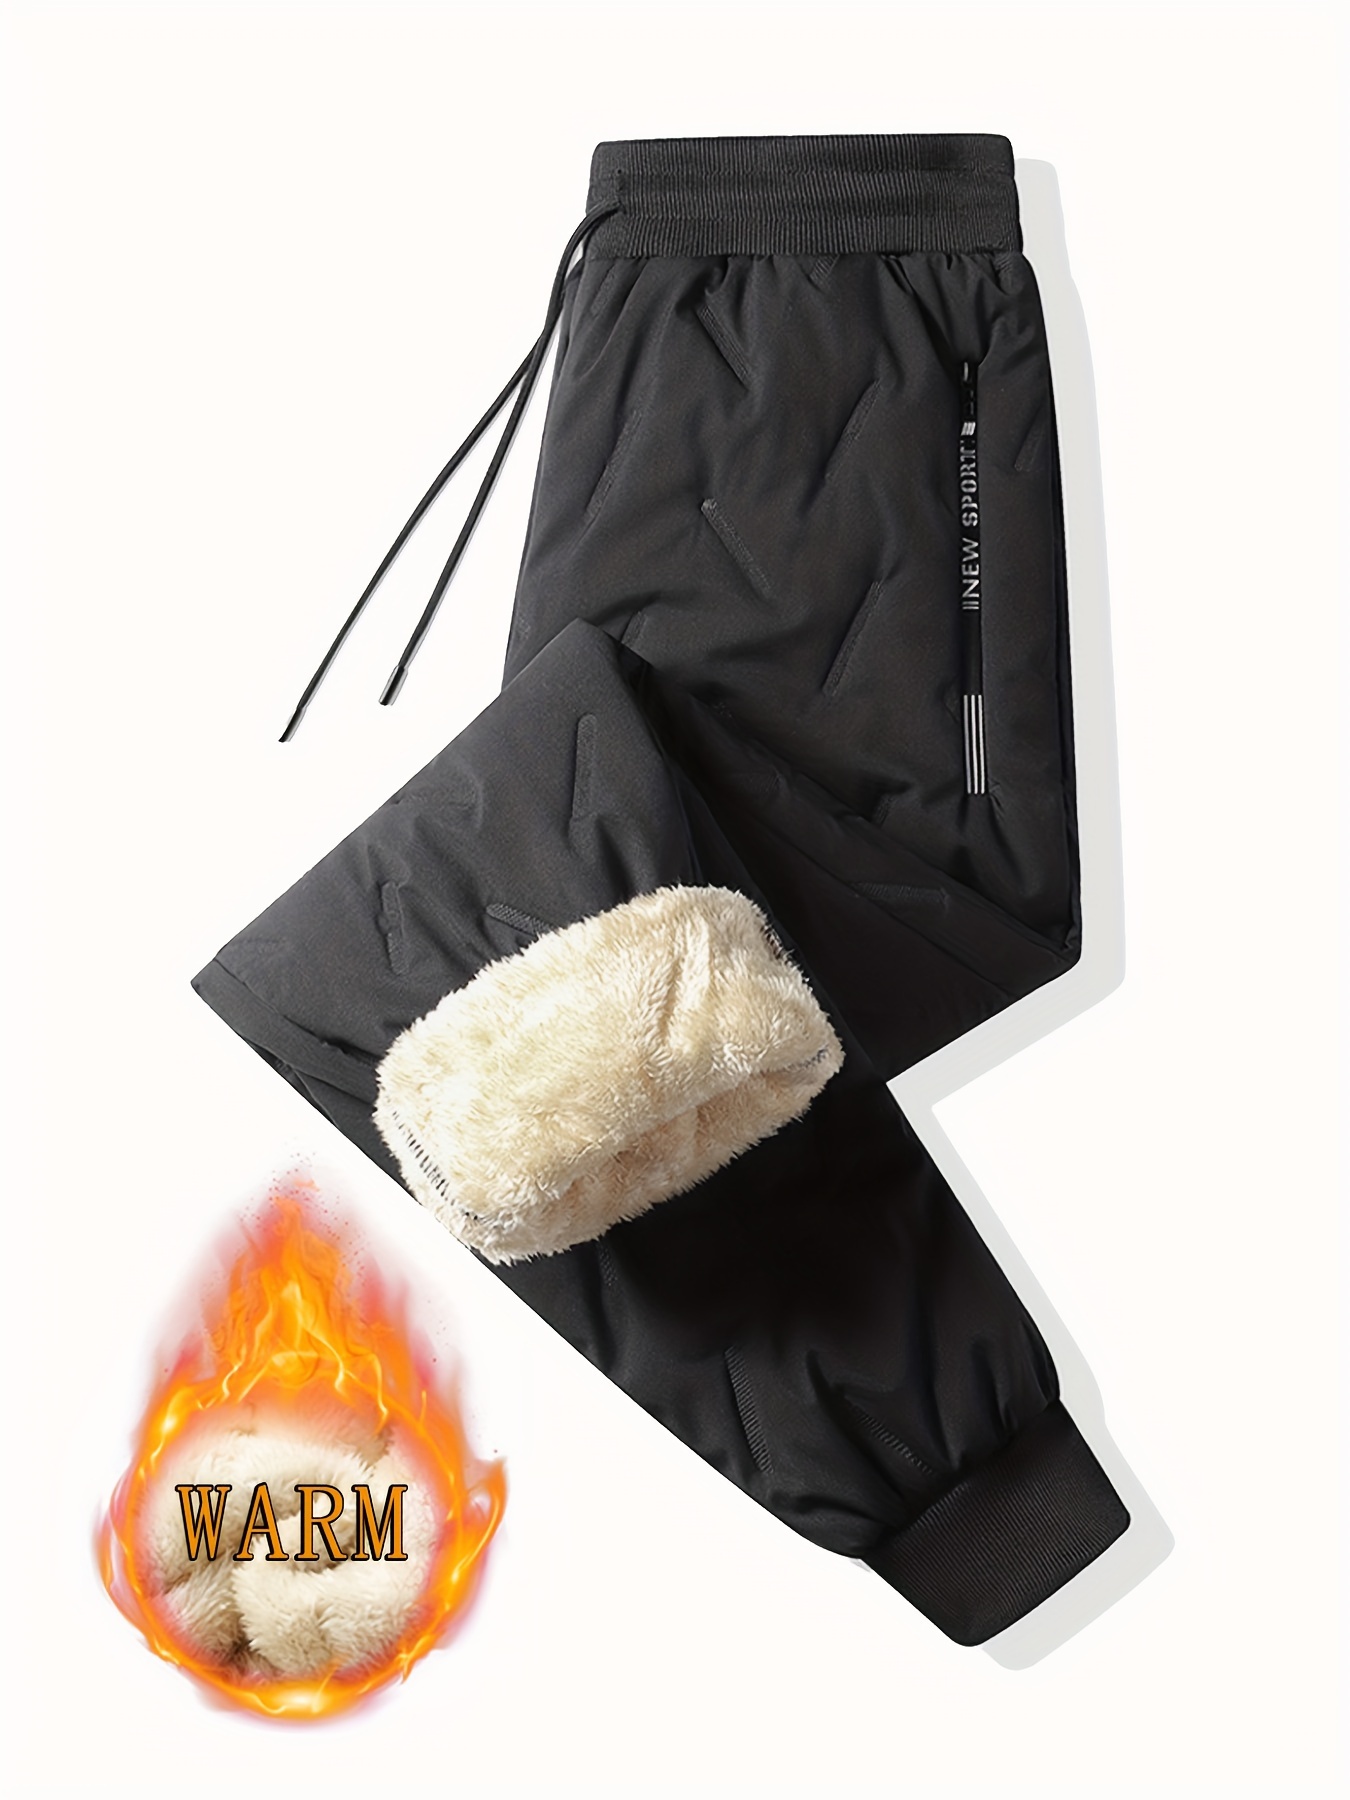 Men's Winter Warm Fleece Lined Pants Outdoor Sports Camping